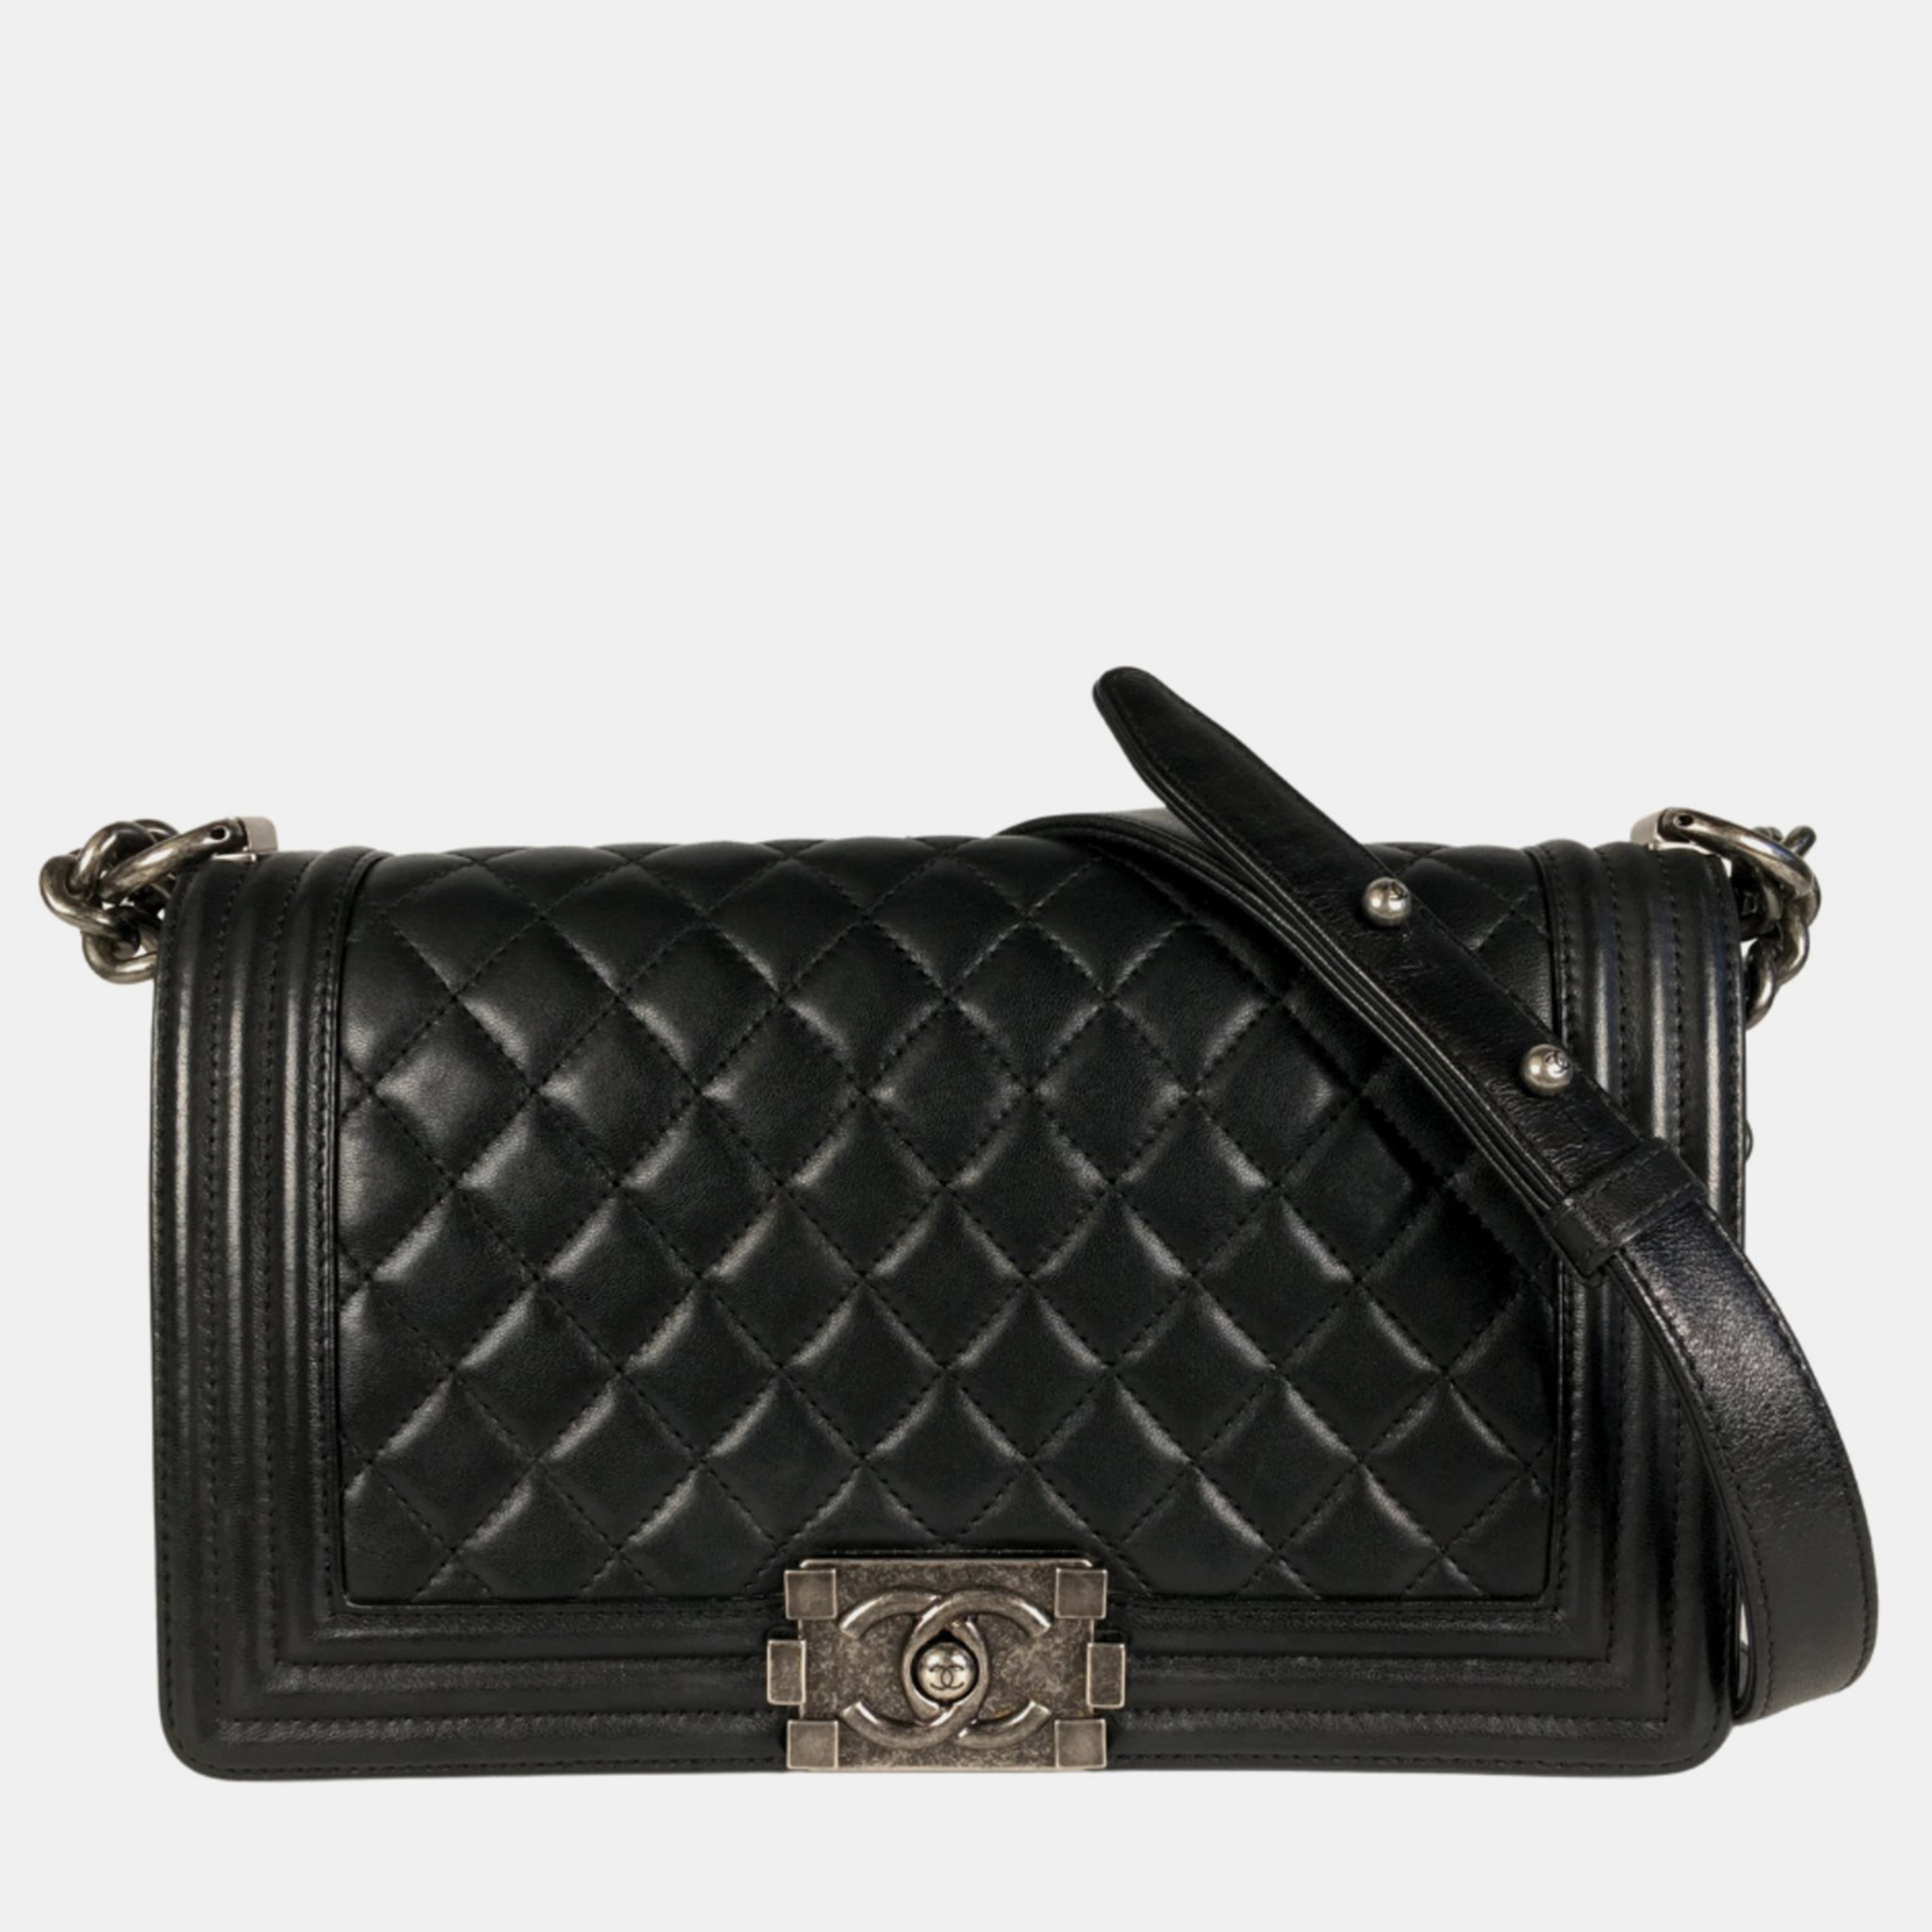 Chanel black lambskin leather medium boy shoulder bag